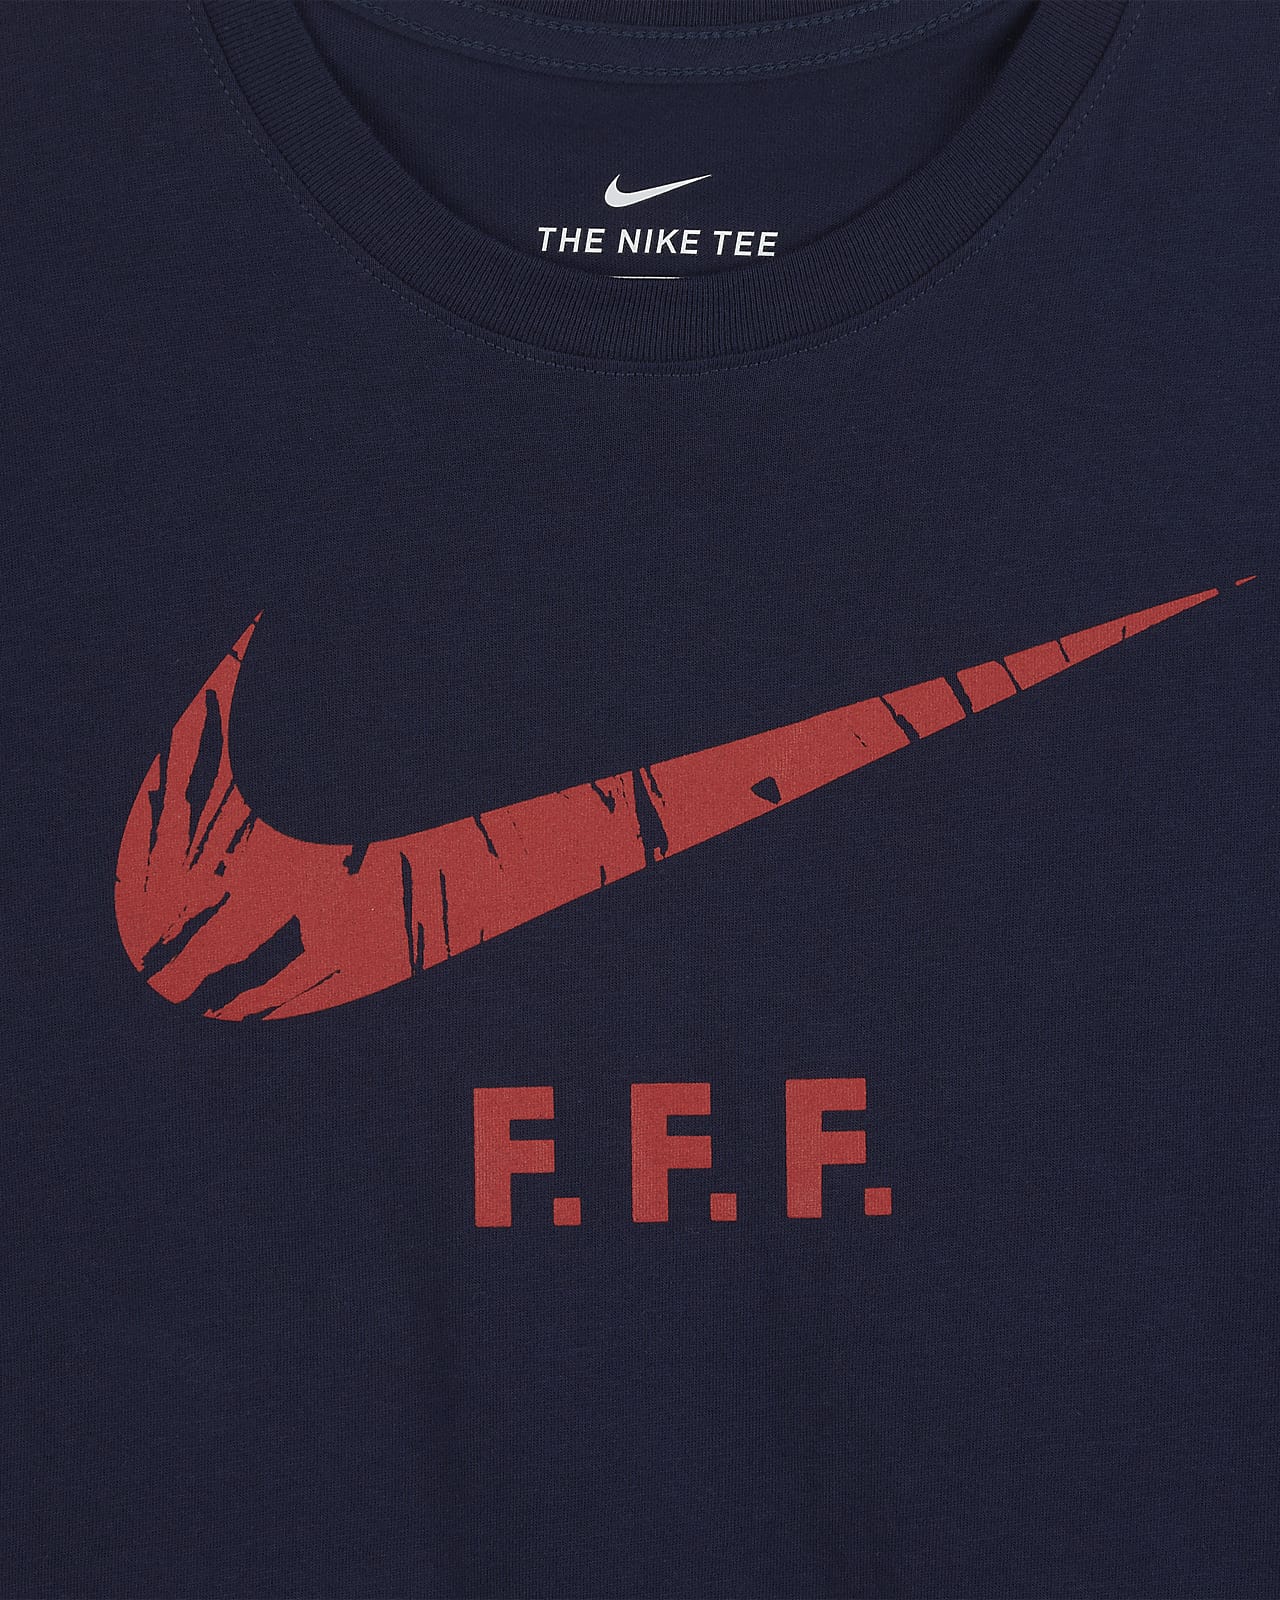 Каре найк. Nike FFF. ЗИП Nike FFF. Nike t Shirt. Футболка найк FFF.